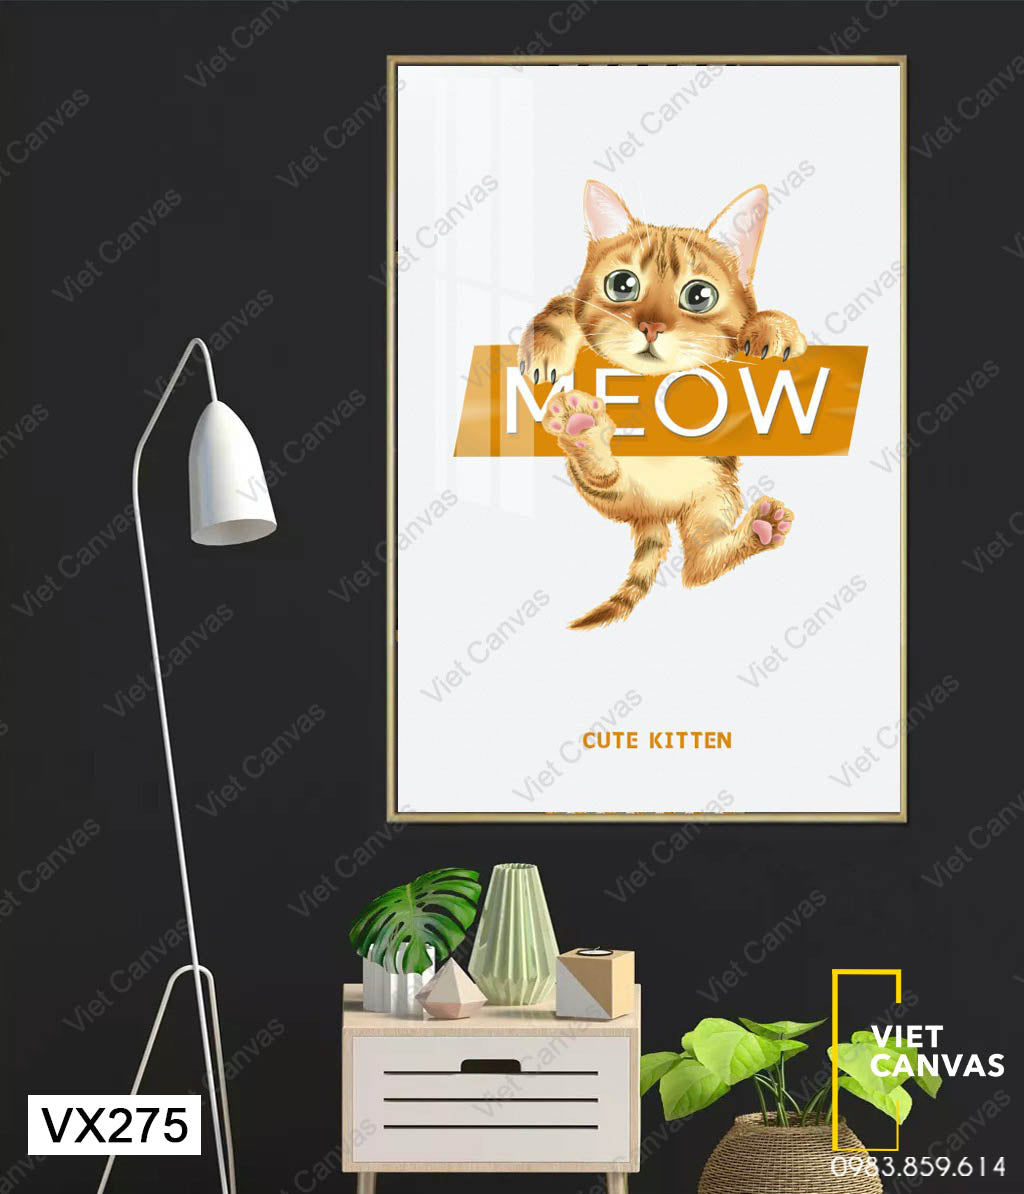 Tranh Chú Mèo Meow - VX275